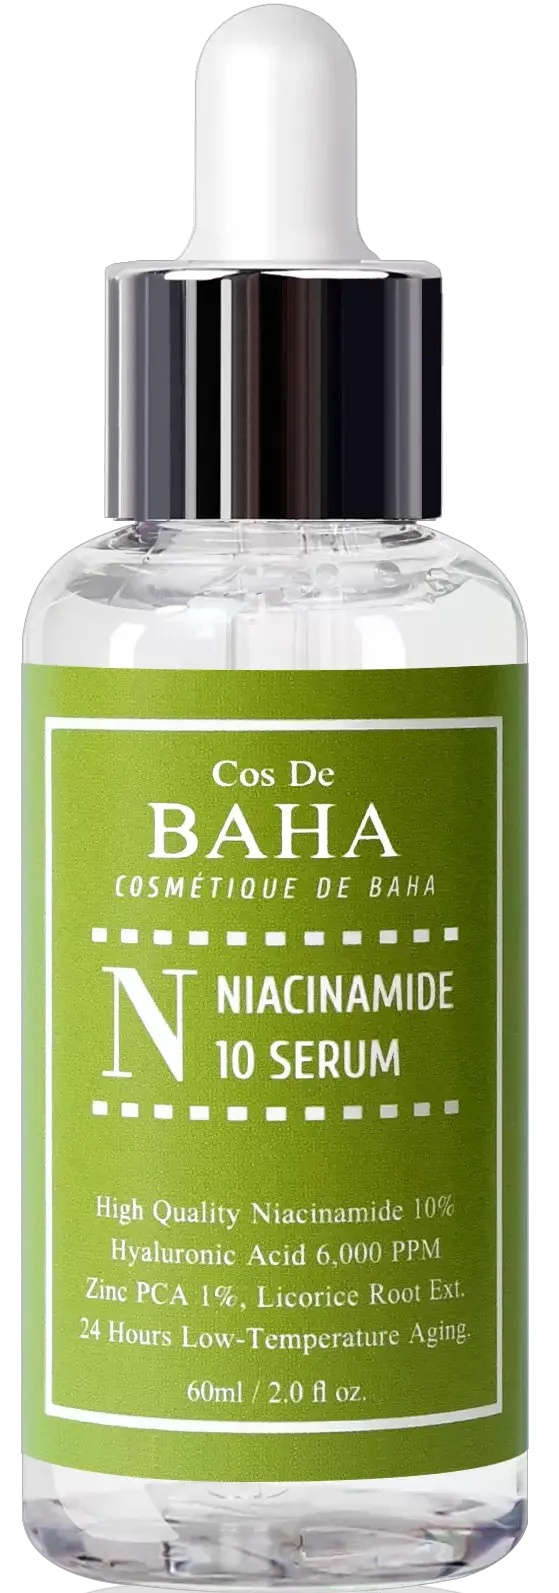 Cos De BAHA Niacinamide 10% + Zinc 1% Serum